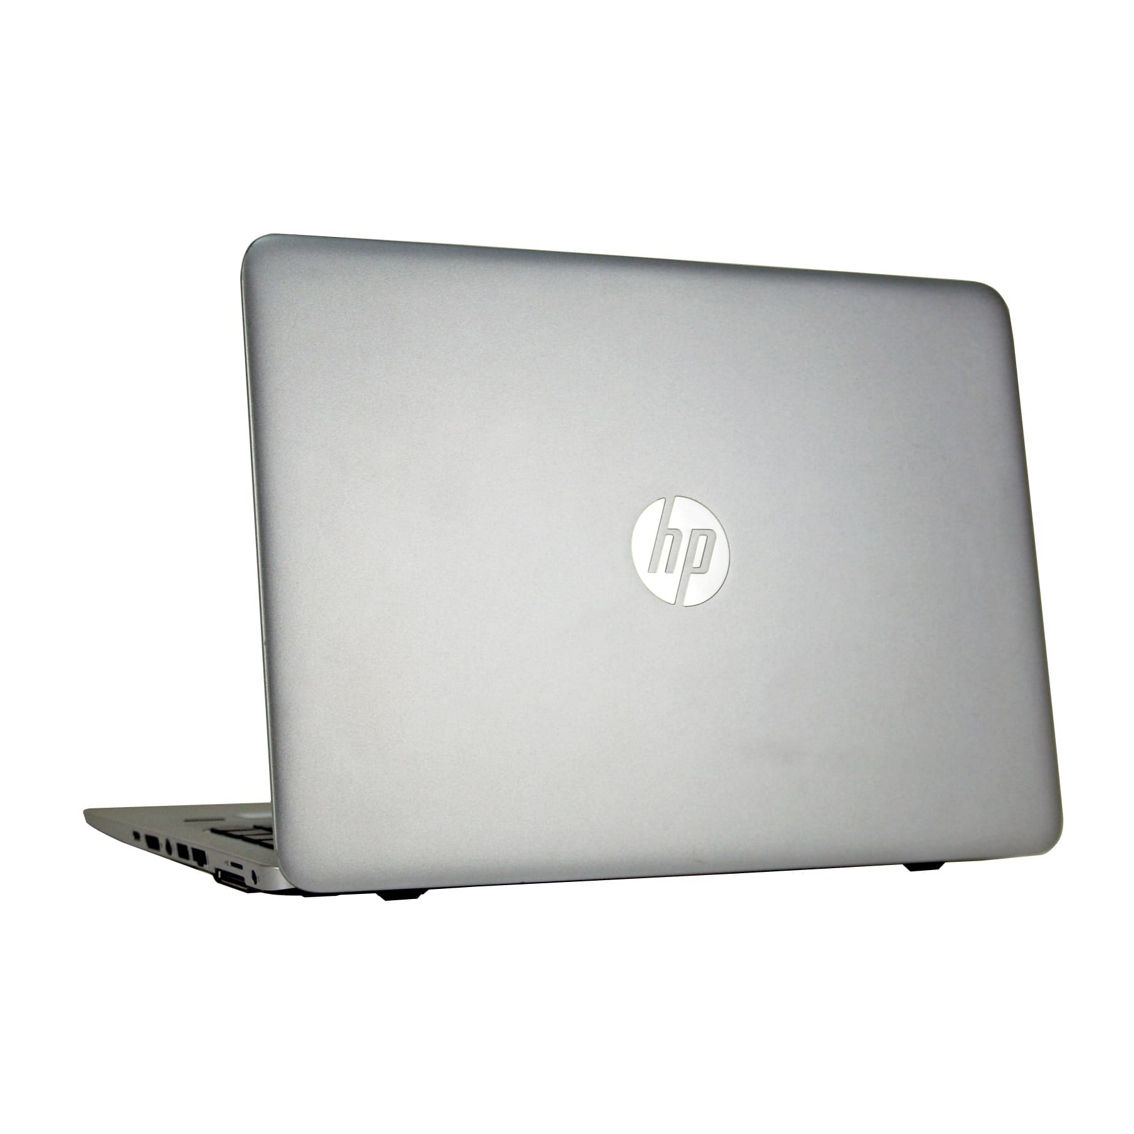 HP 840 G3 Core i7-6600U 2.6GHz 16GB Ram 256GB SSD Laptop (Refurbished) - Image 2 of 4